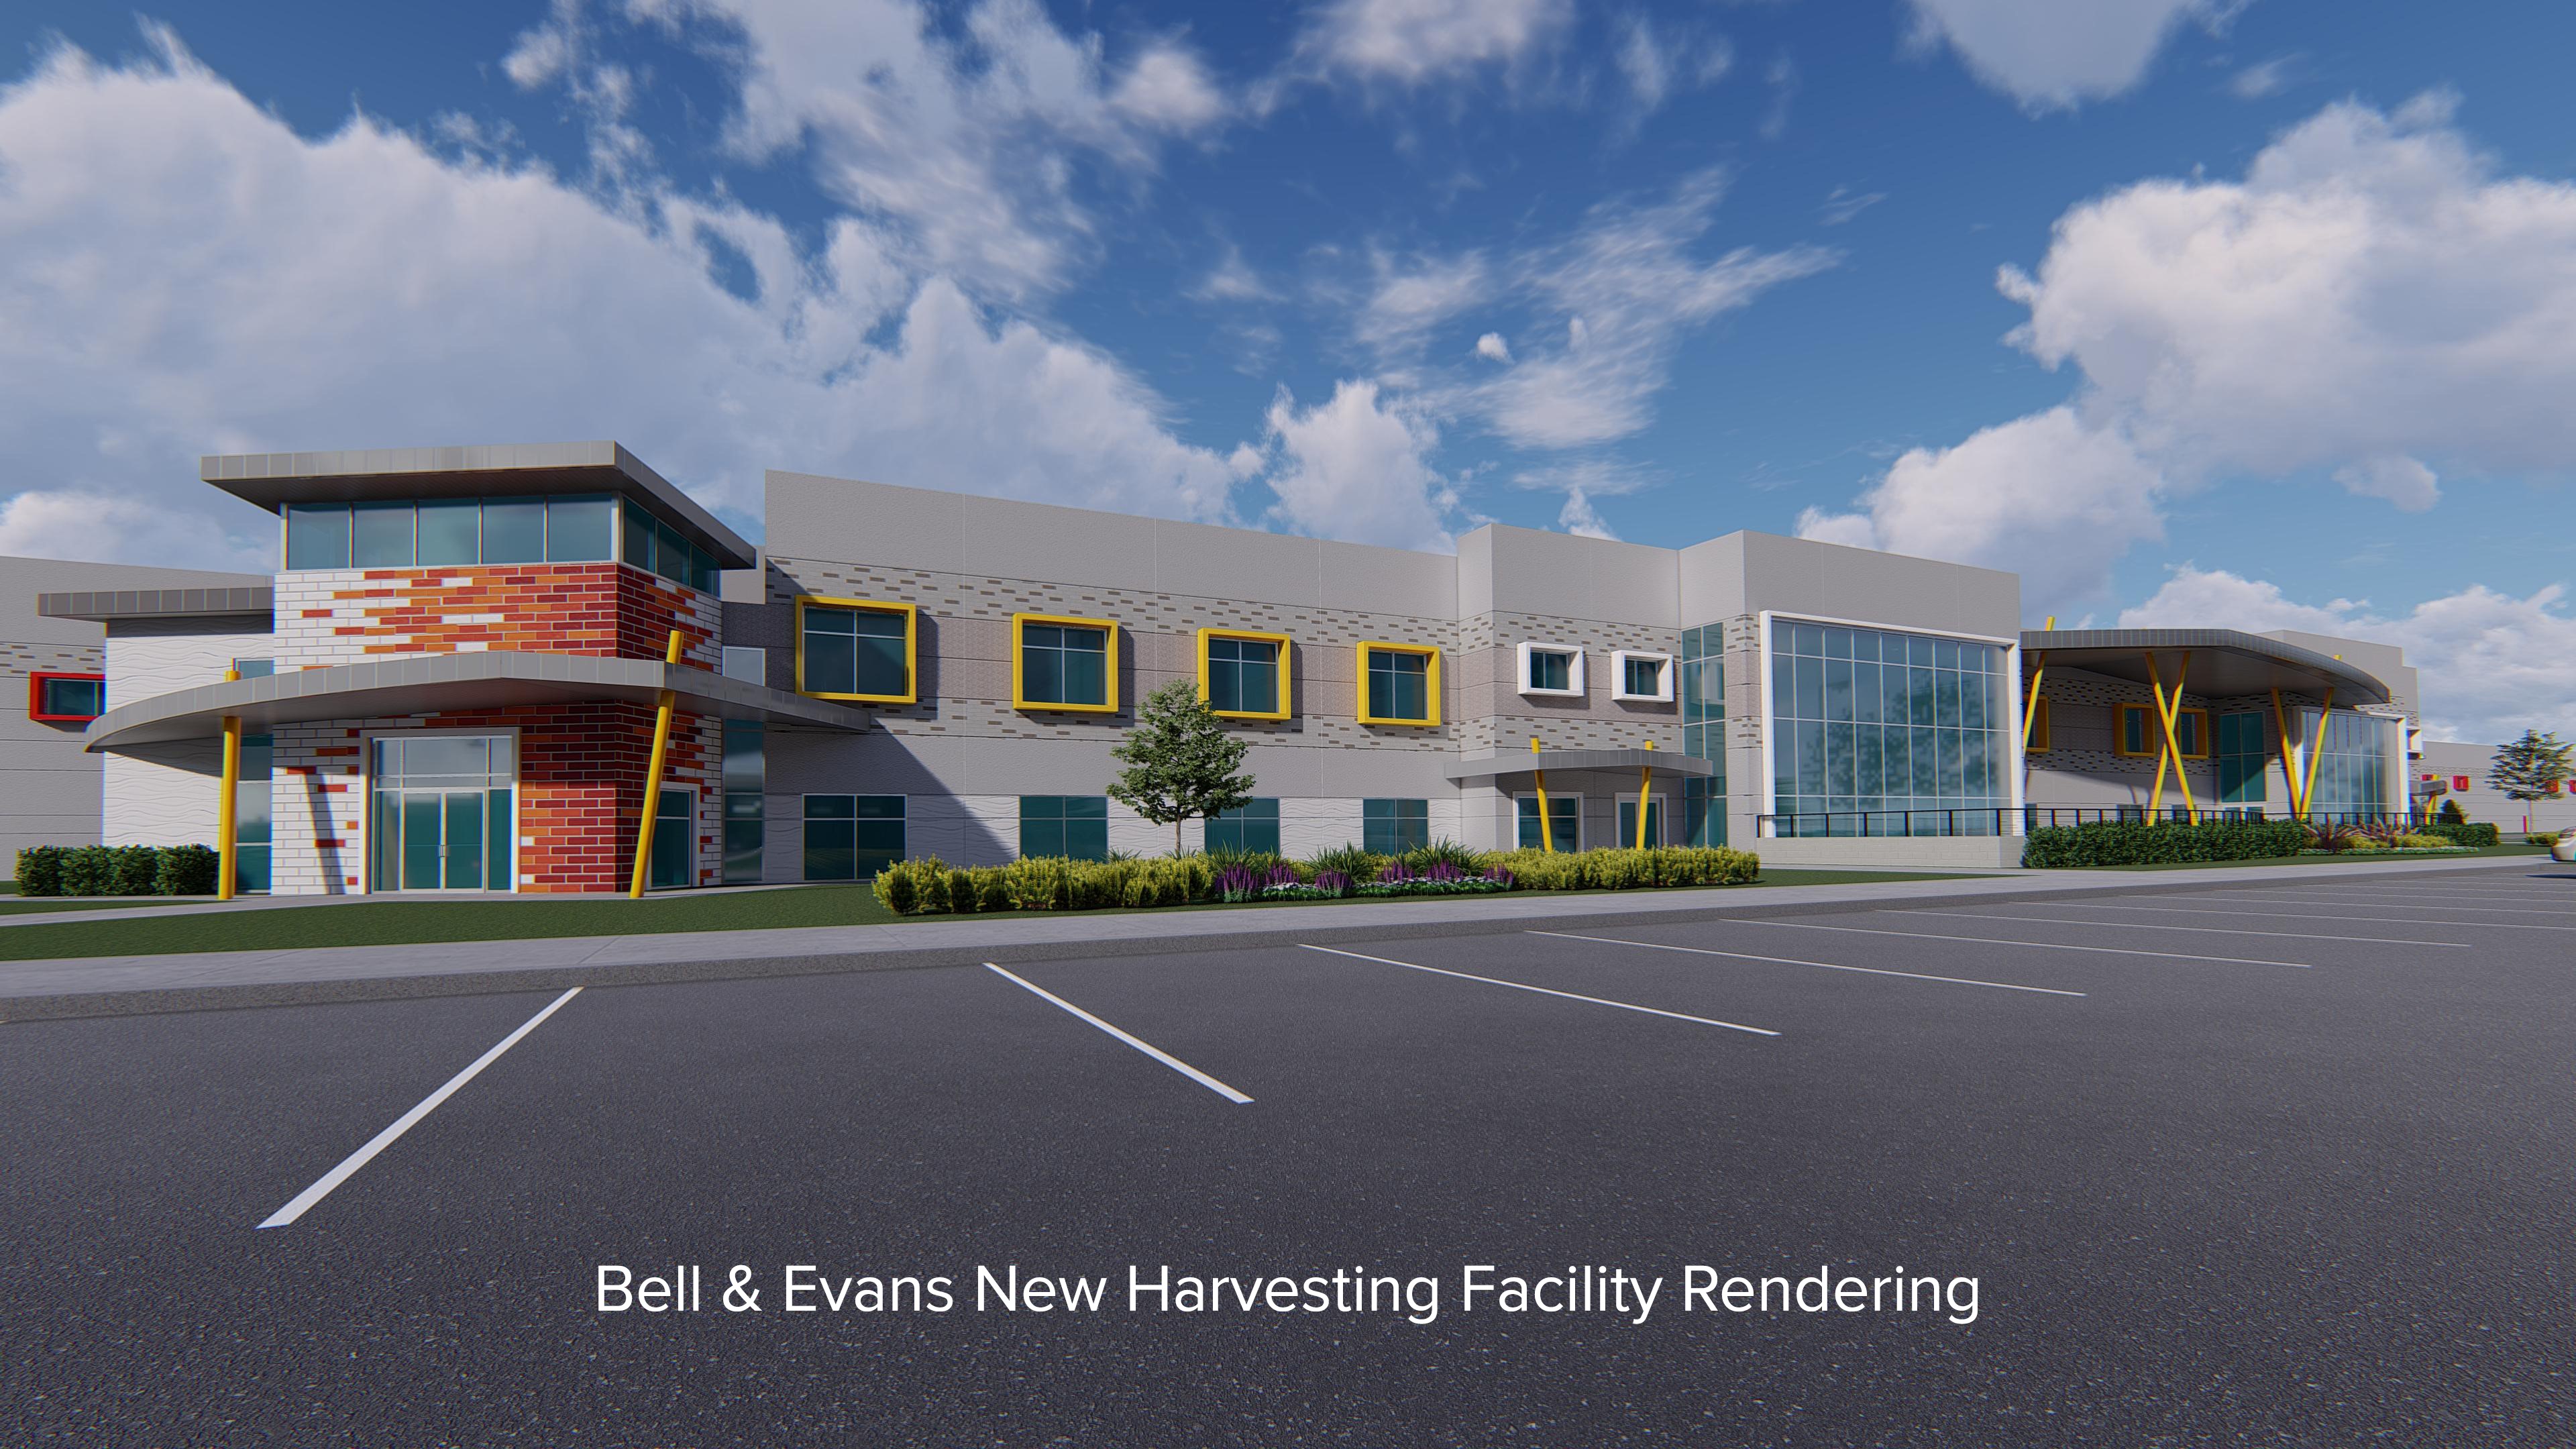 Bell & Evans New Harvesting Facility Rendering